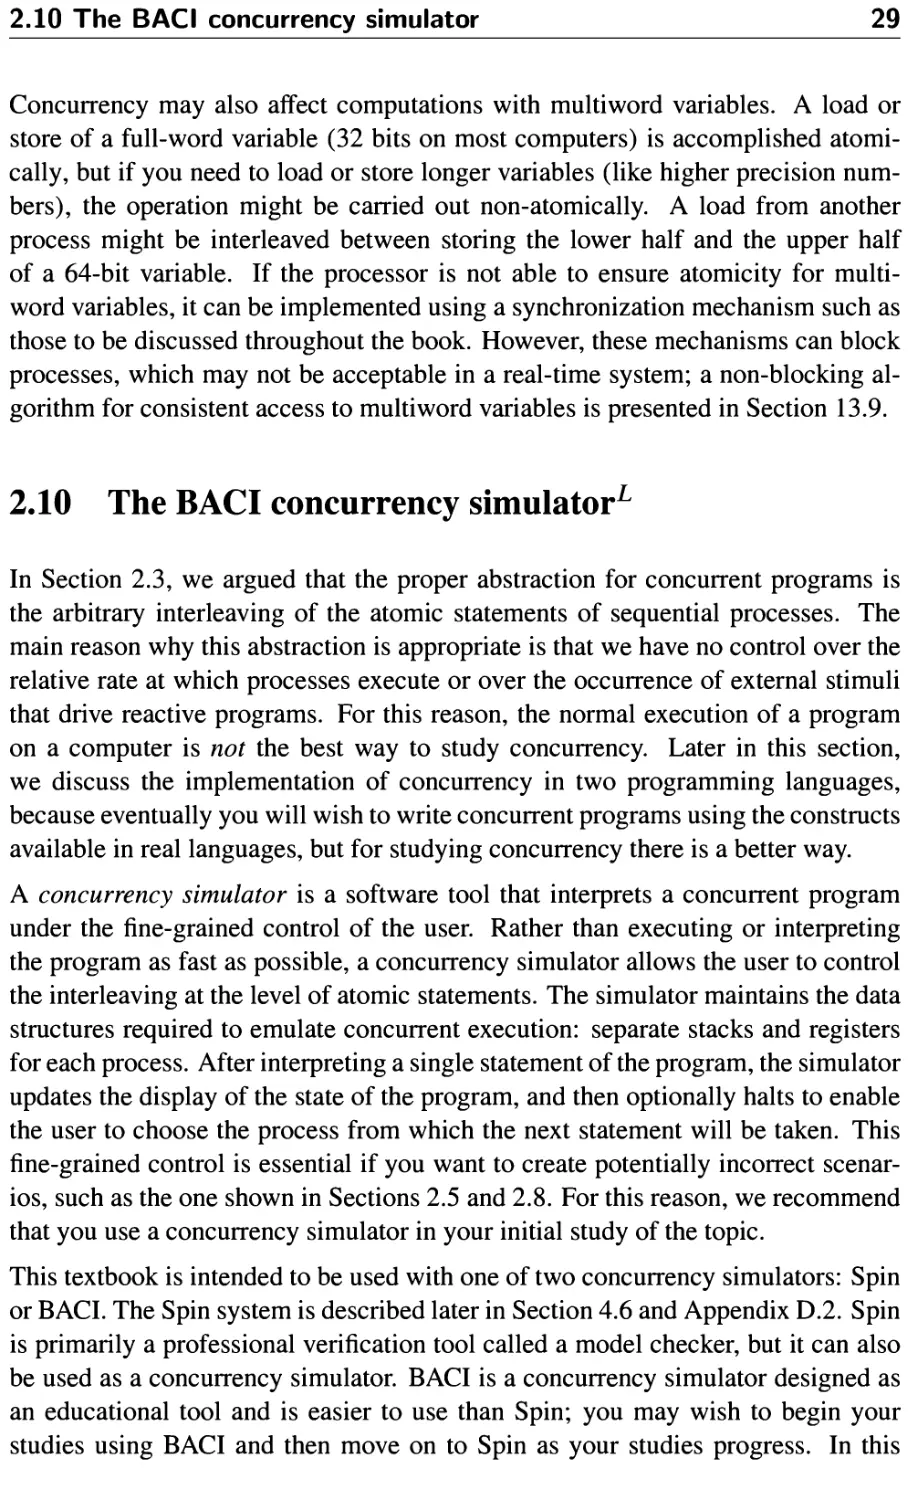 2.10 The BACI concurrency simulator